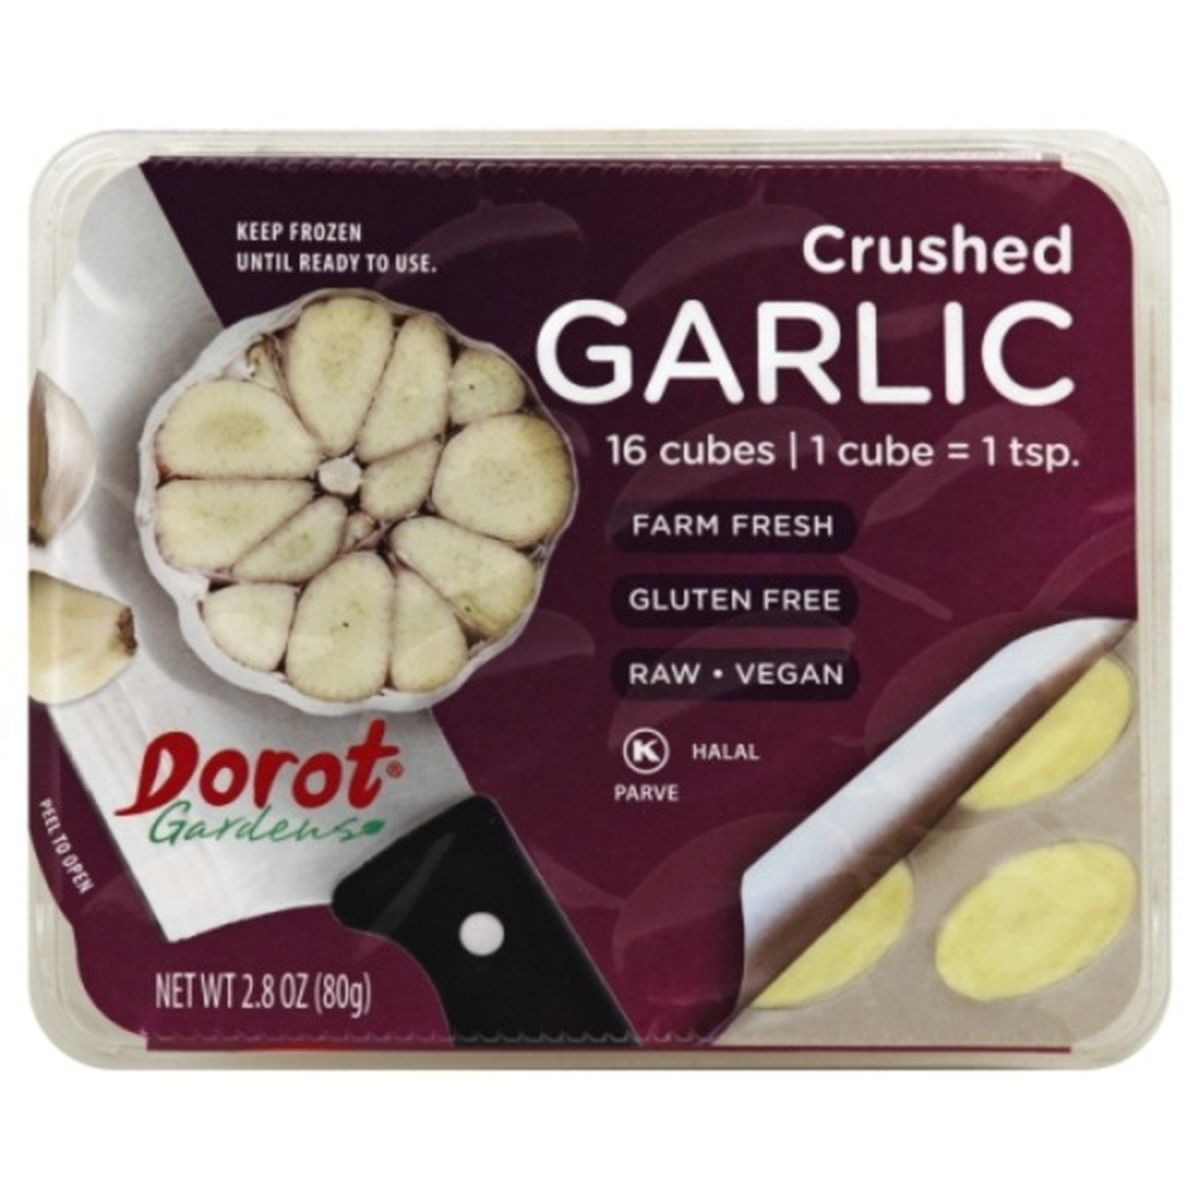 Calories in Dorot Garlic, Crushed